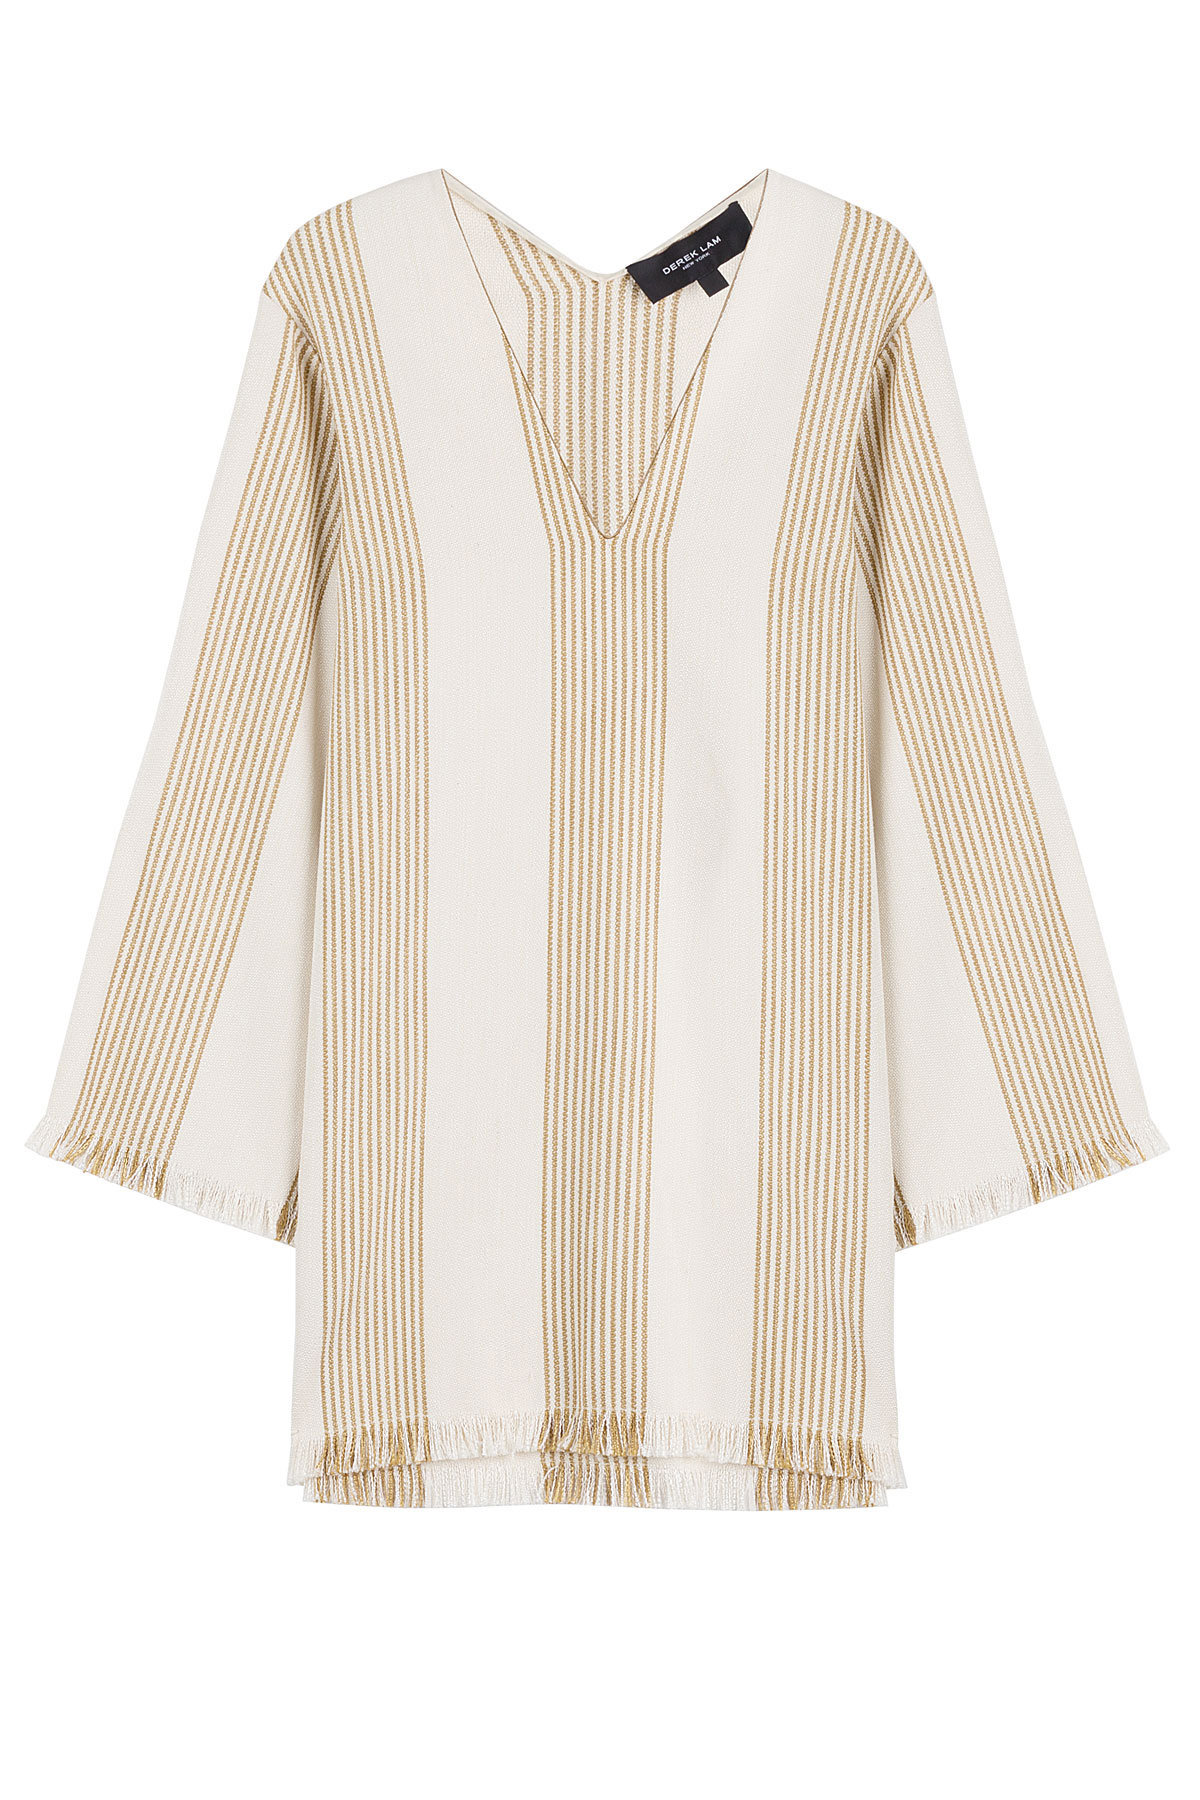 Derek Lam - Embroidered Cotton Blend Tunic Dress